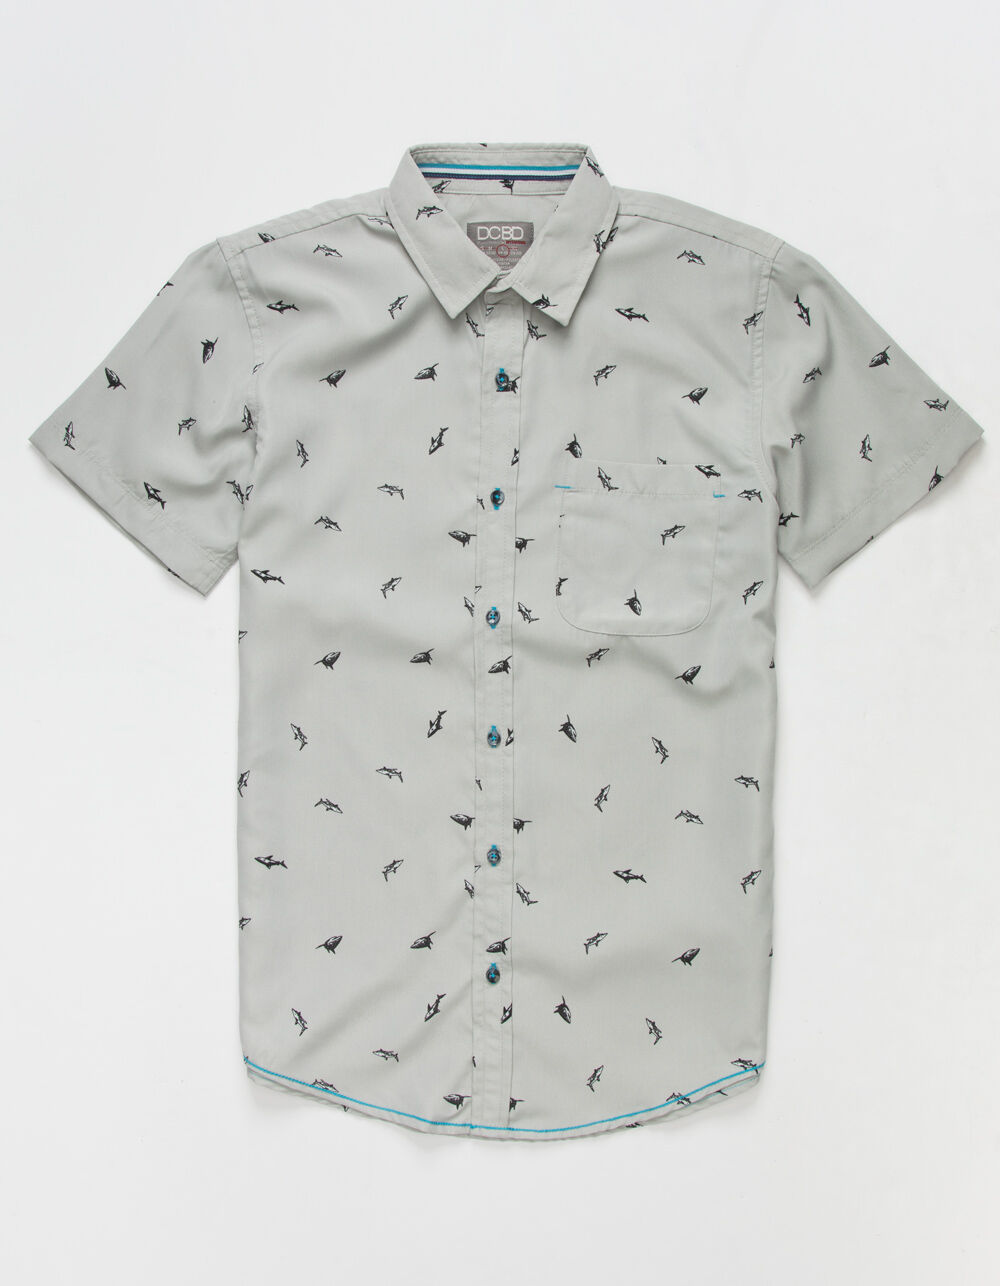 DCBD Sharks Boys Button Up Shirt - GRAY | Tillys